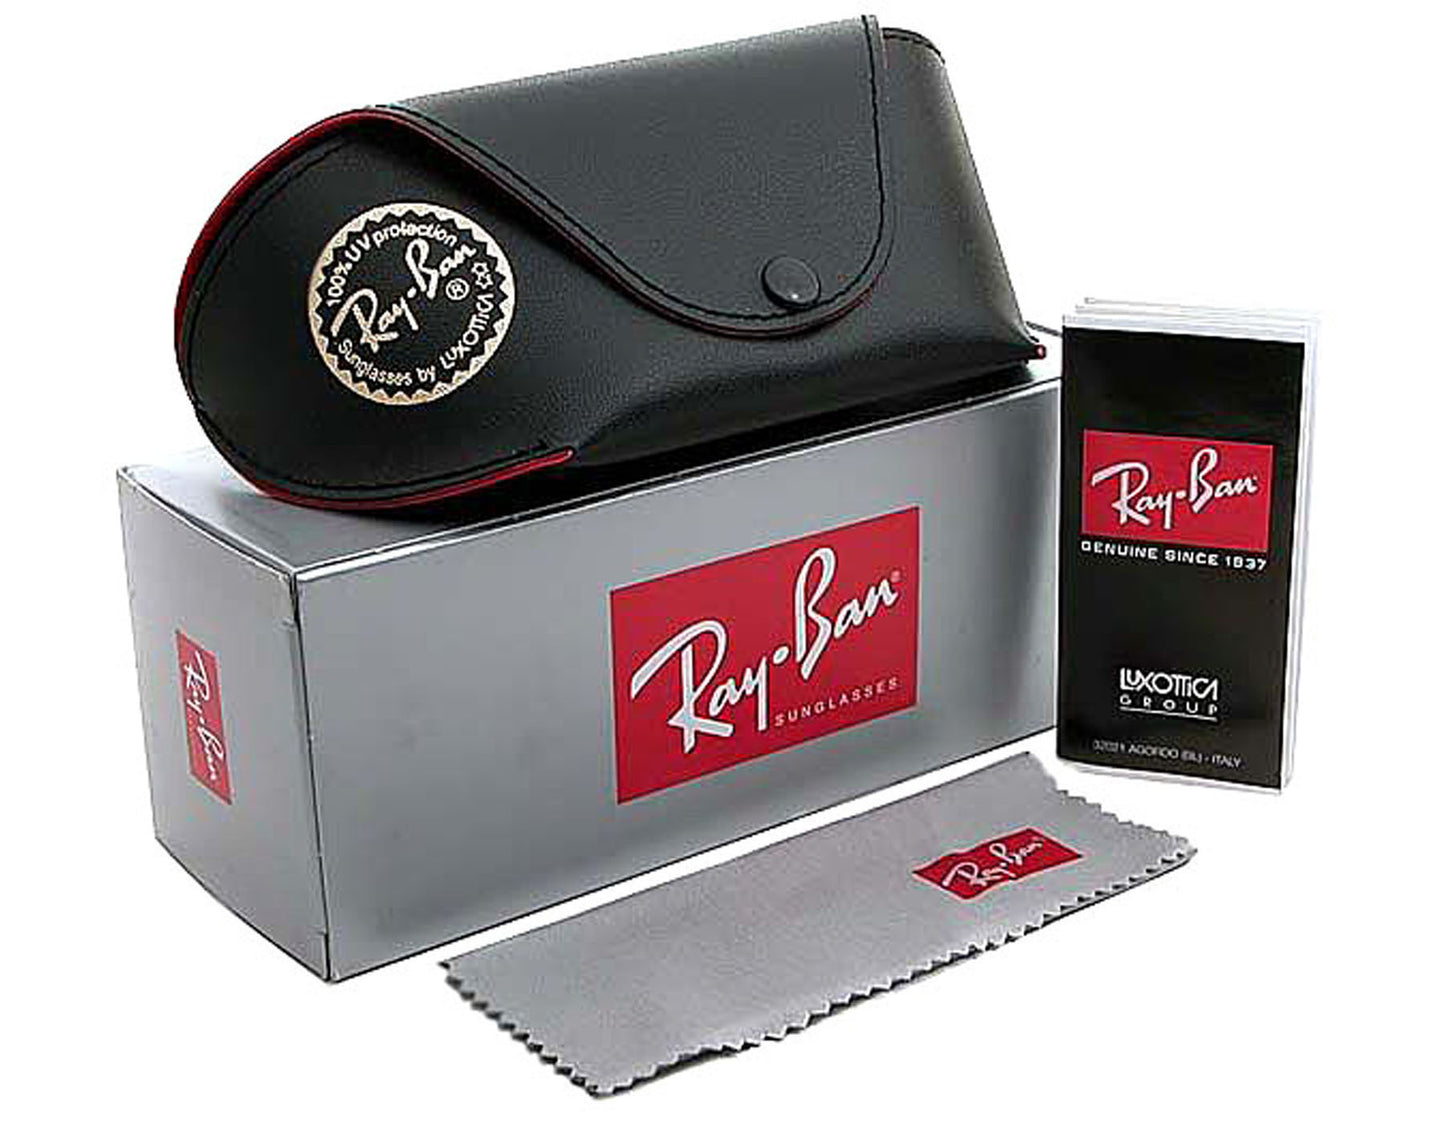 Ray Ban RB4387-710-73-56  New Sunglasses